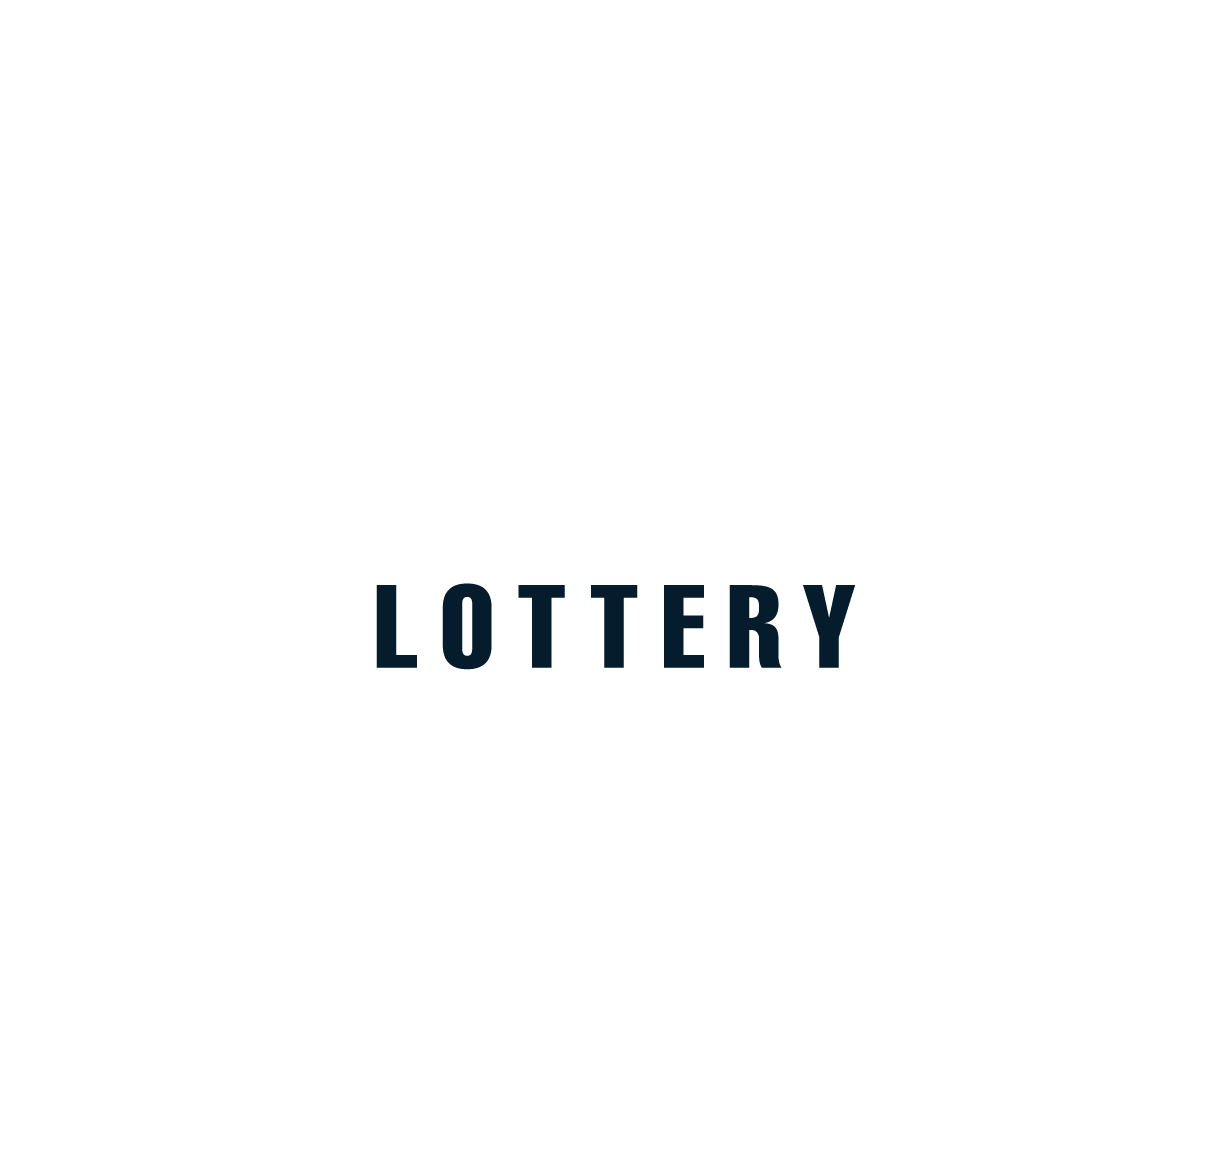 Fantasy League Lottery